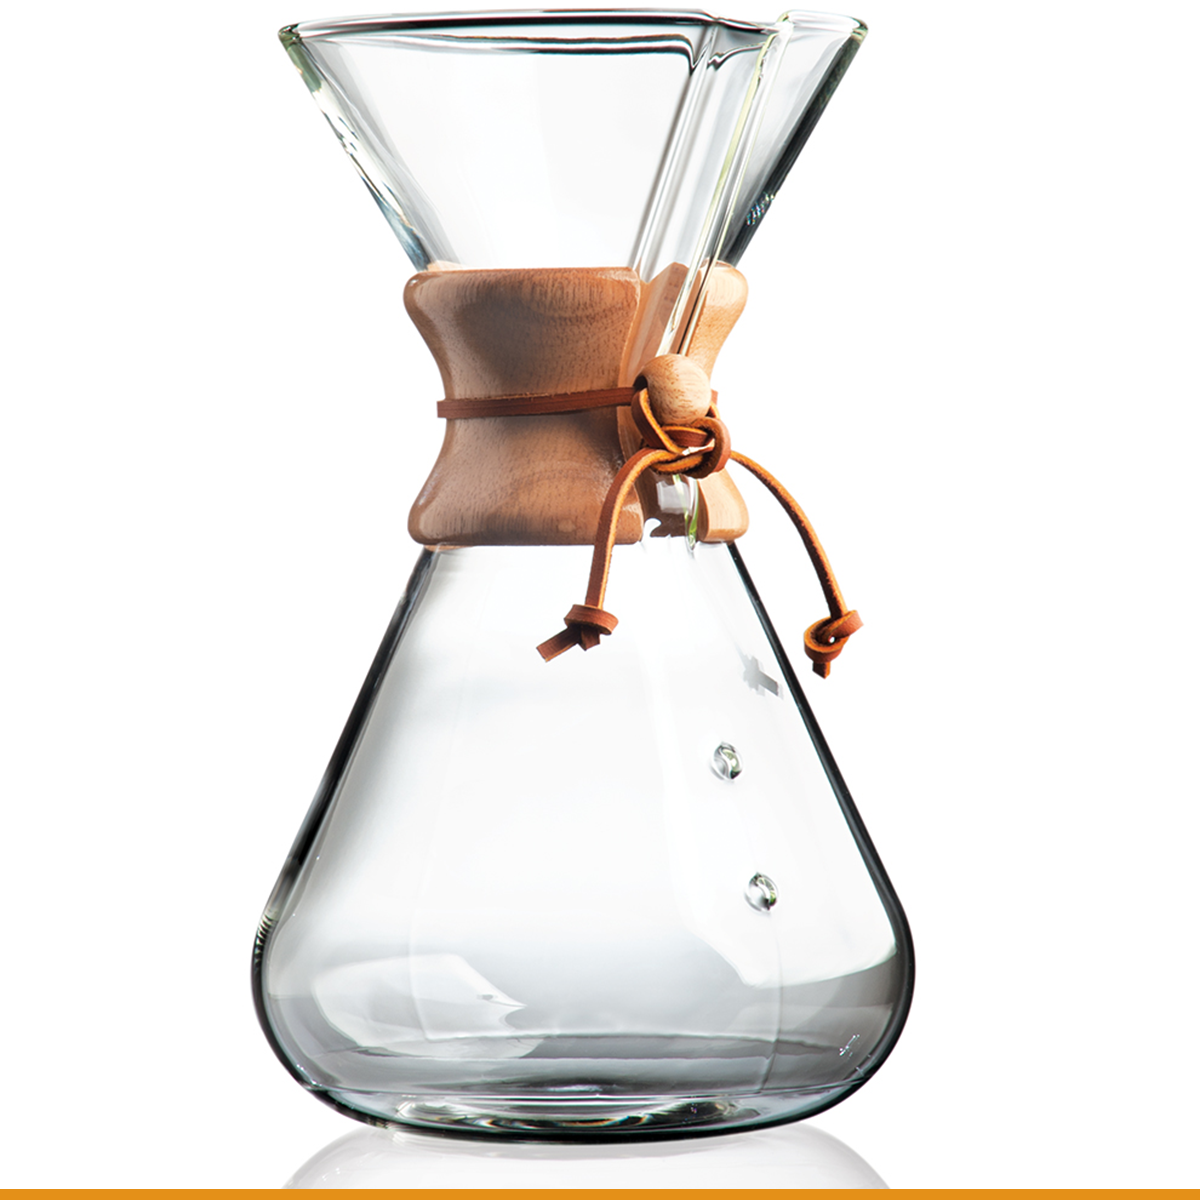 Chemex Shocks World With High Concept $350 Coffee Maker